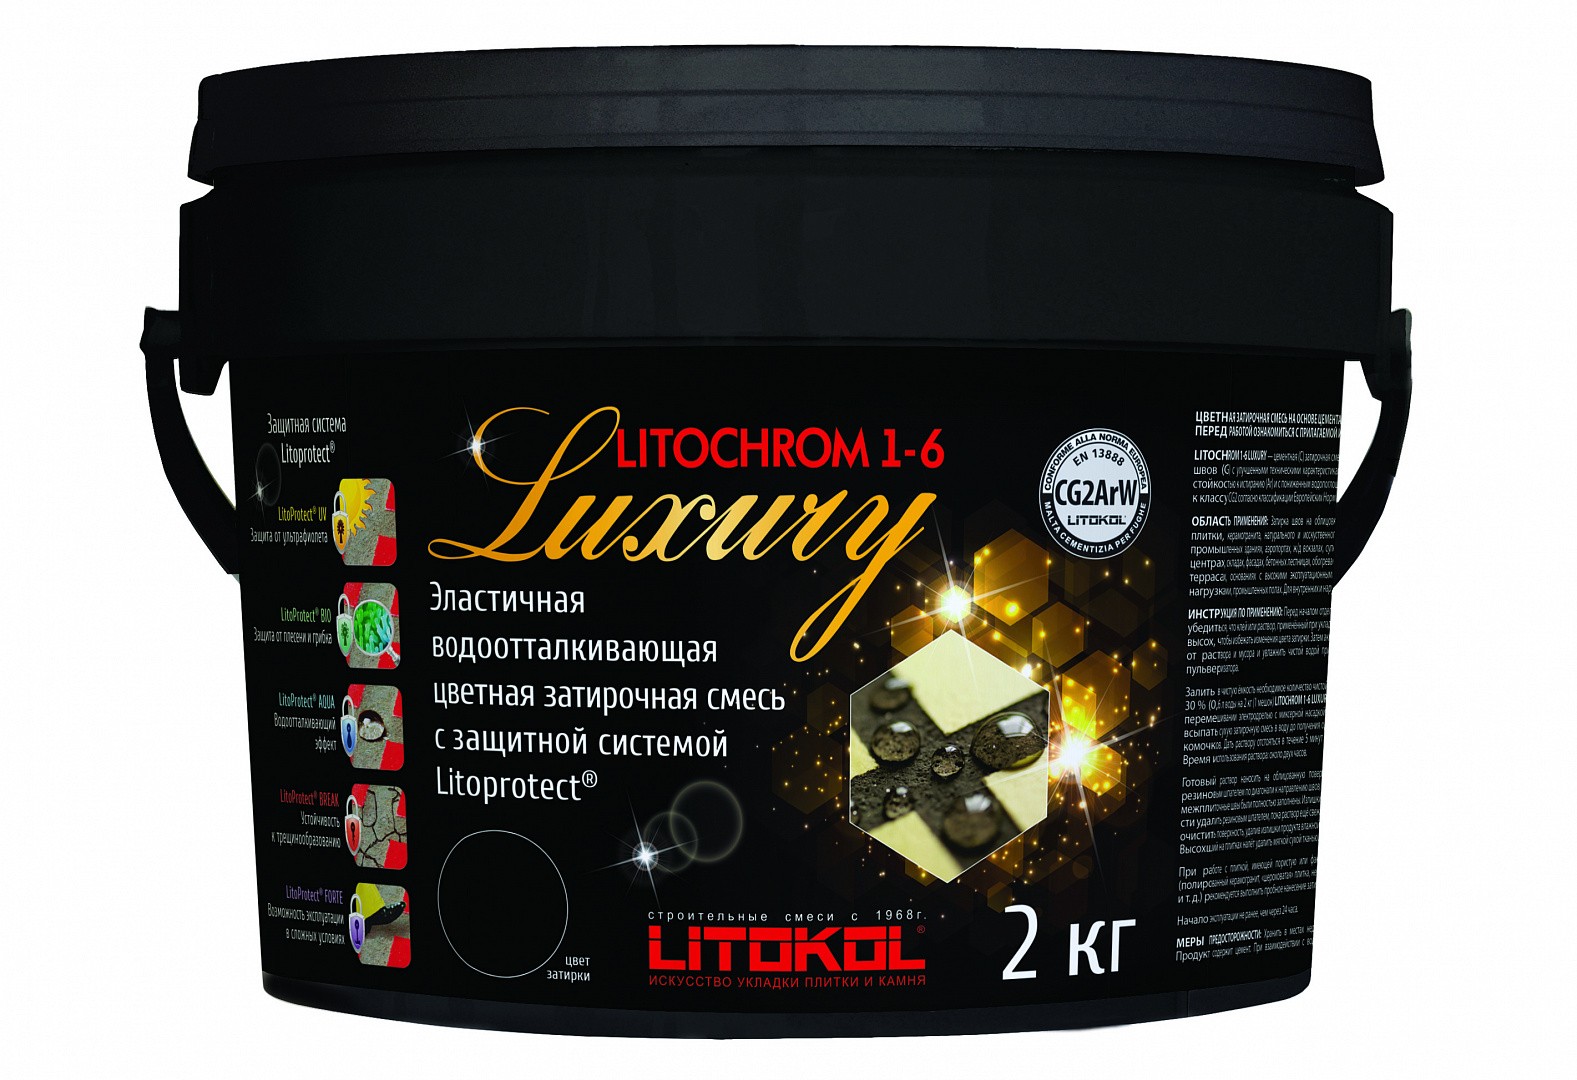 Цементная затирочная смесь LITOCHROM 1-6 LUXURY C.80